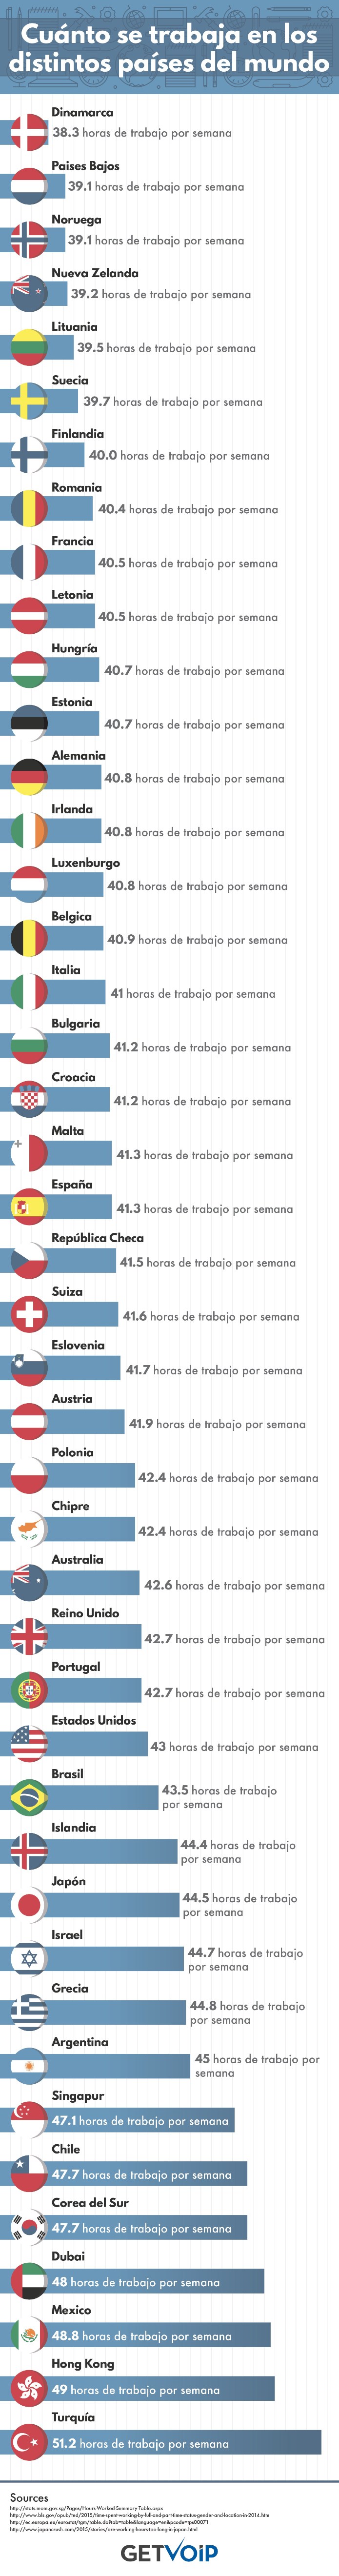 How Much People Work.es (1)